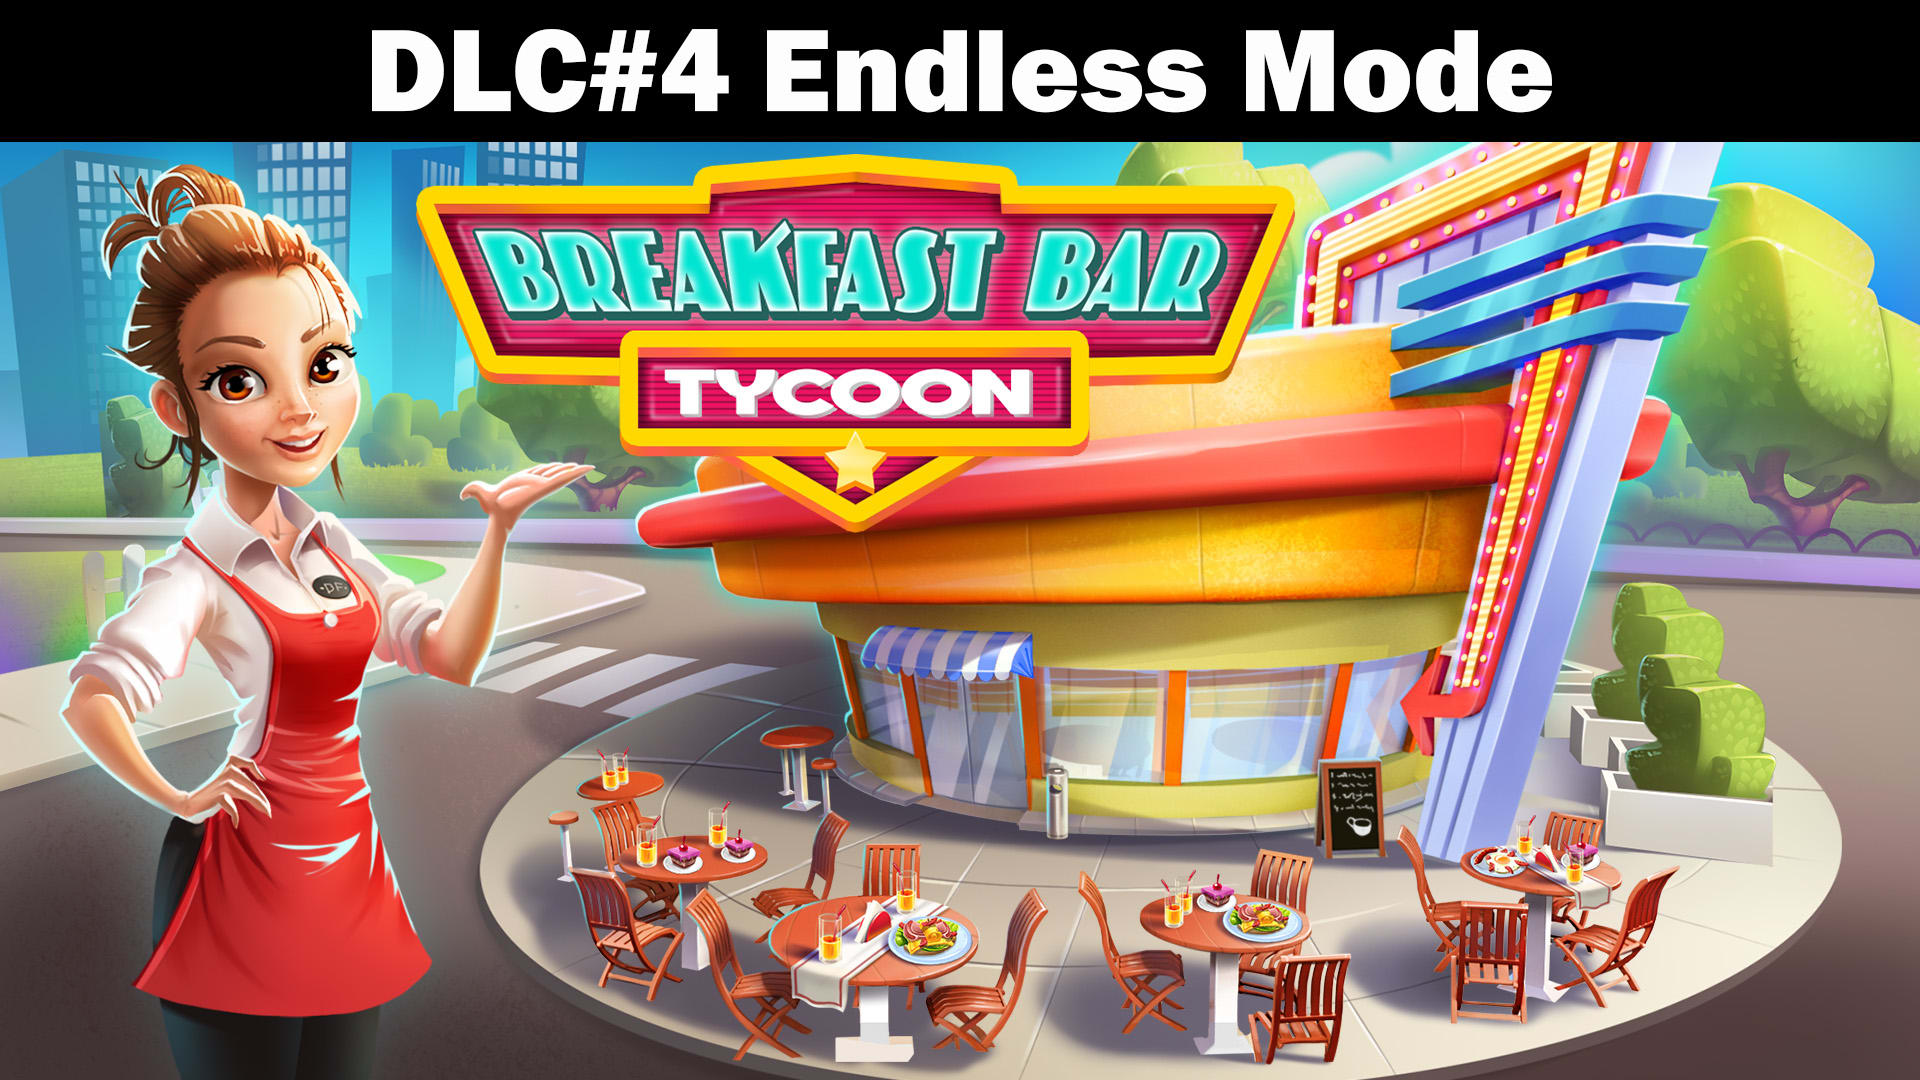 Breakfast Bar Tycoon DLC#4 - Endless Mode